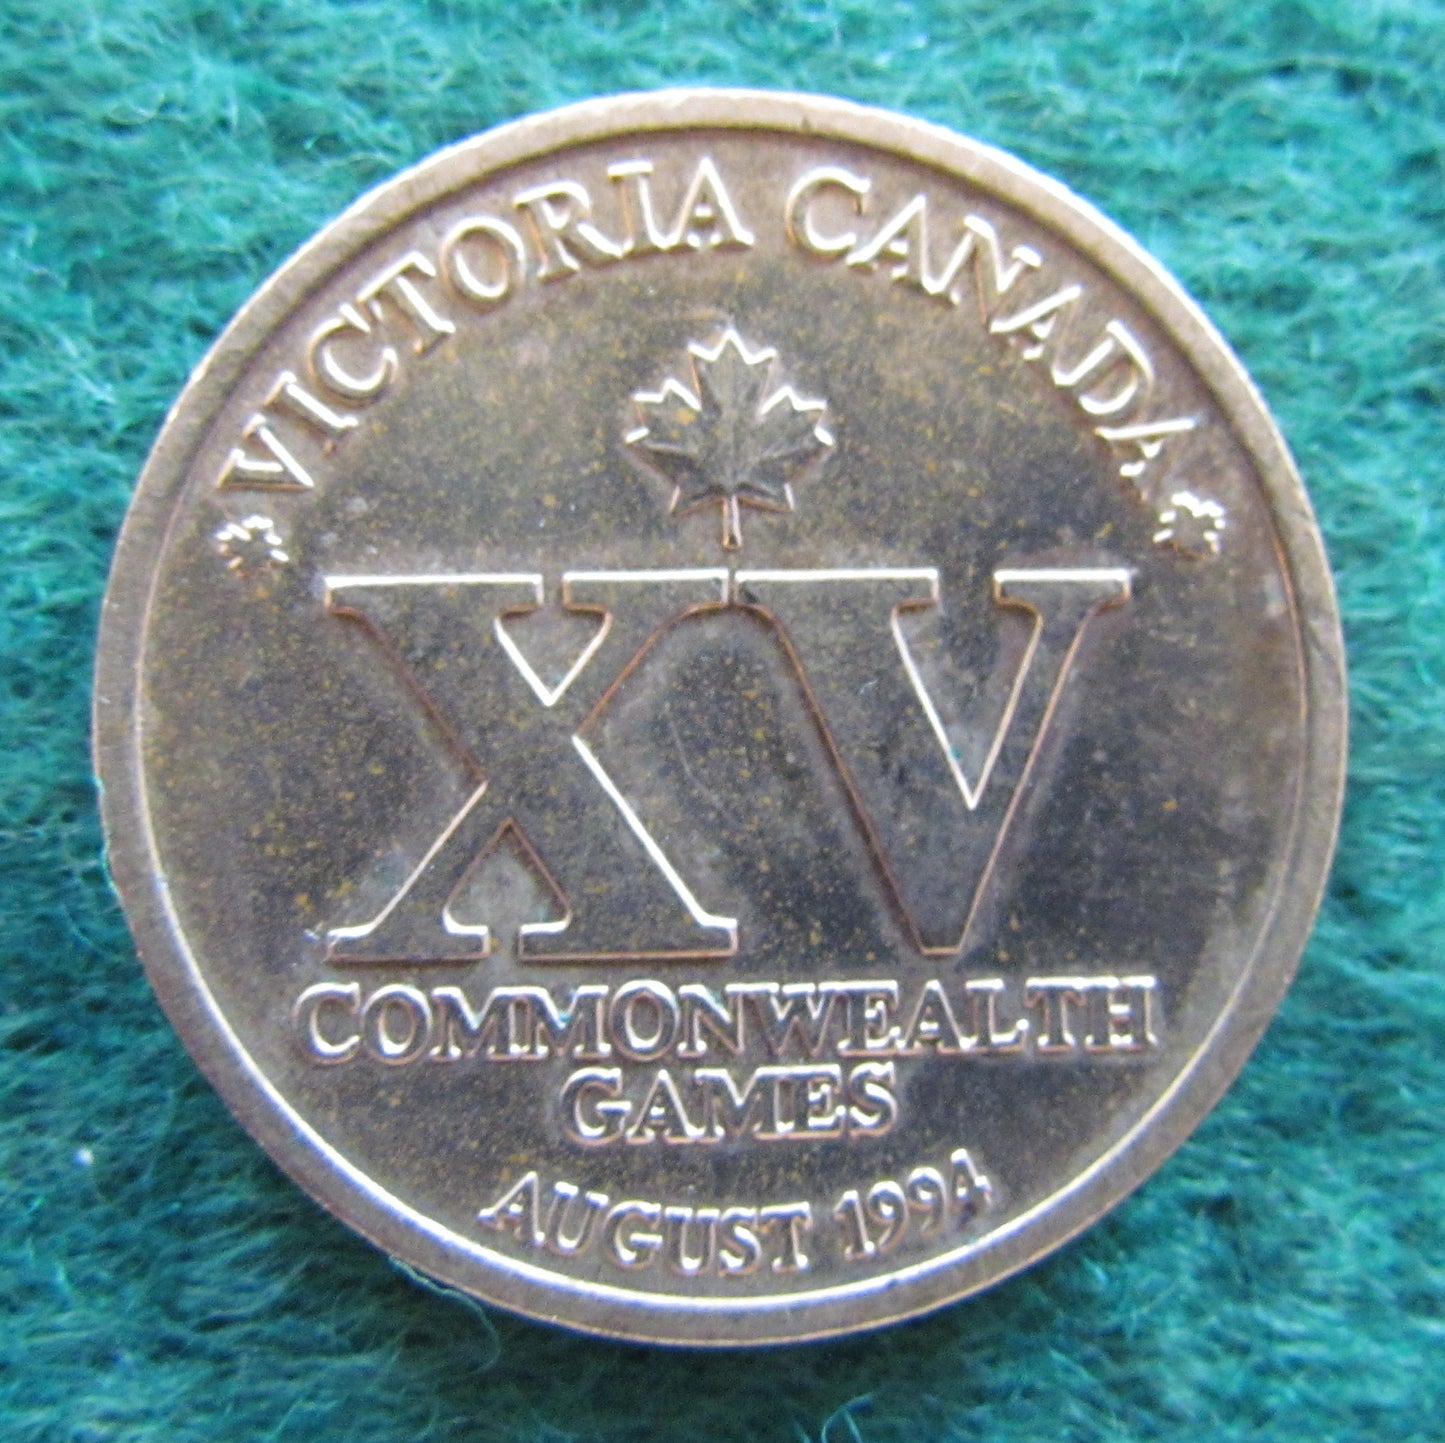 Victoria Canada XV Commonwealth Games August 1994 Medallion - Sunday Telegraph